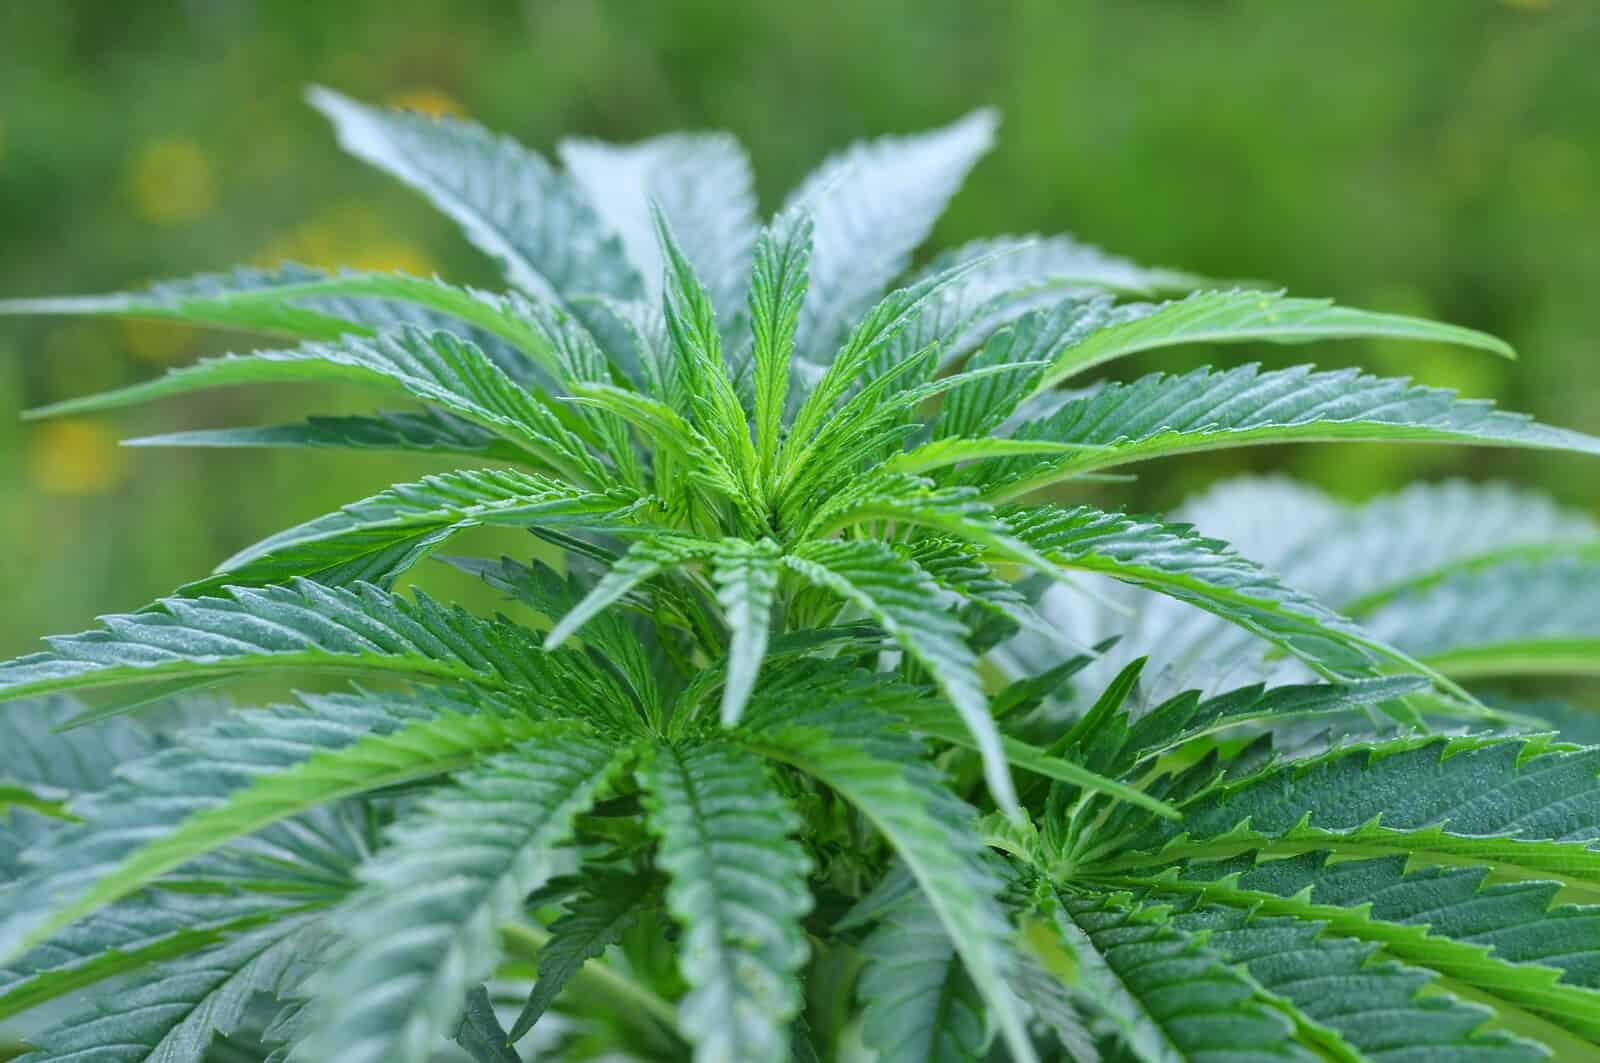 Vermont House Approves Recreational Marijuana Bill